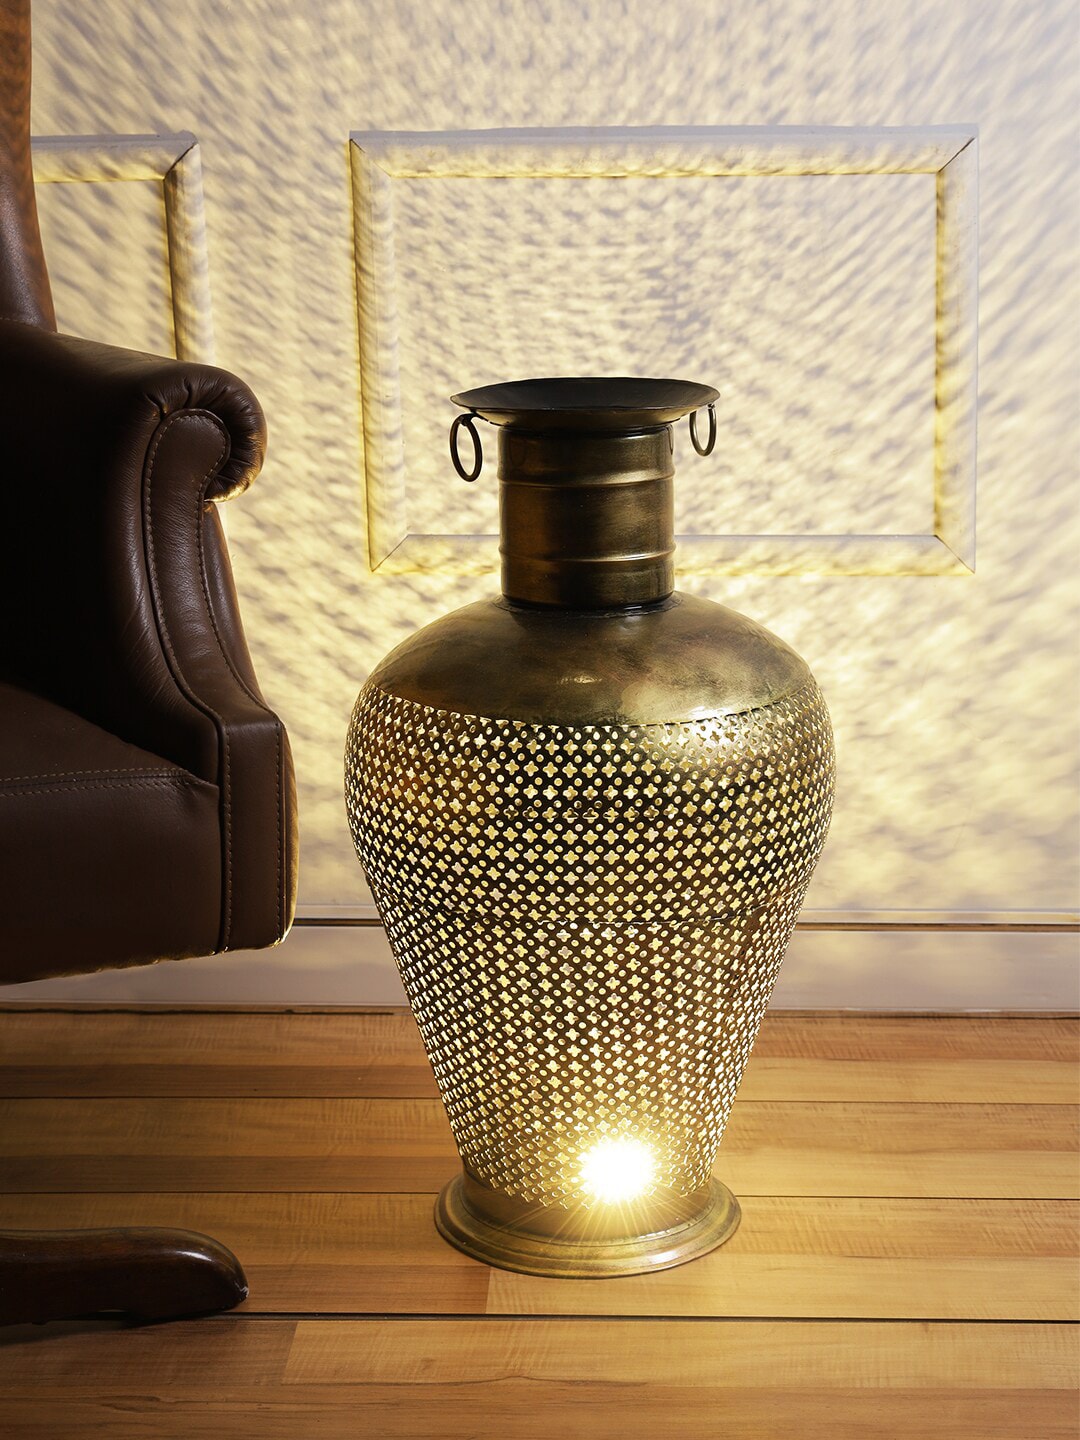 Aapno Rajasthan Gold Textured Metal Floor Lamp Price in India